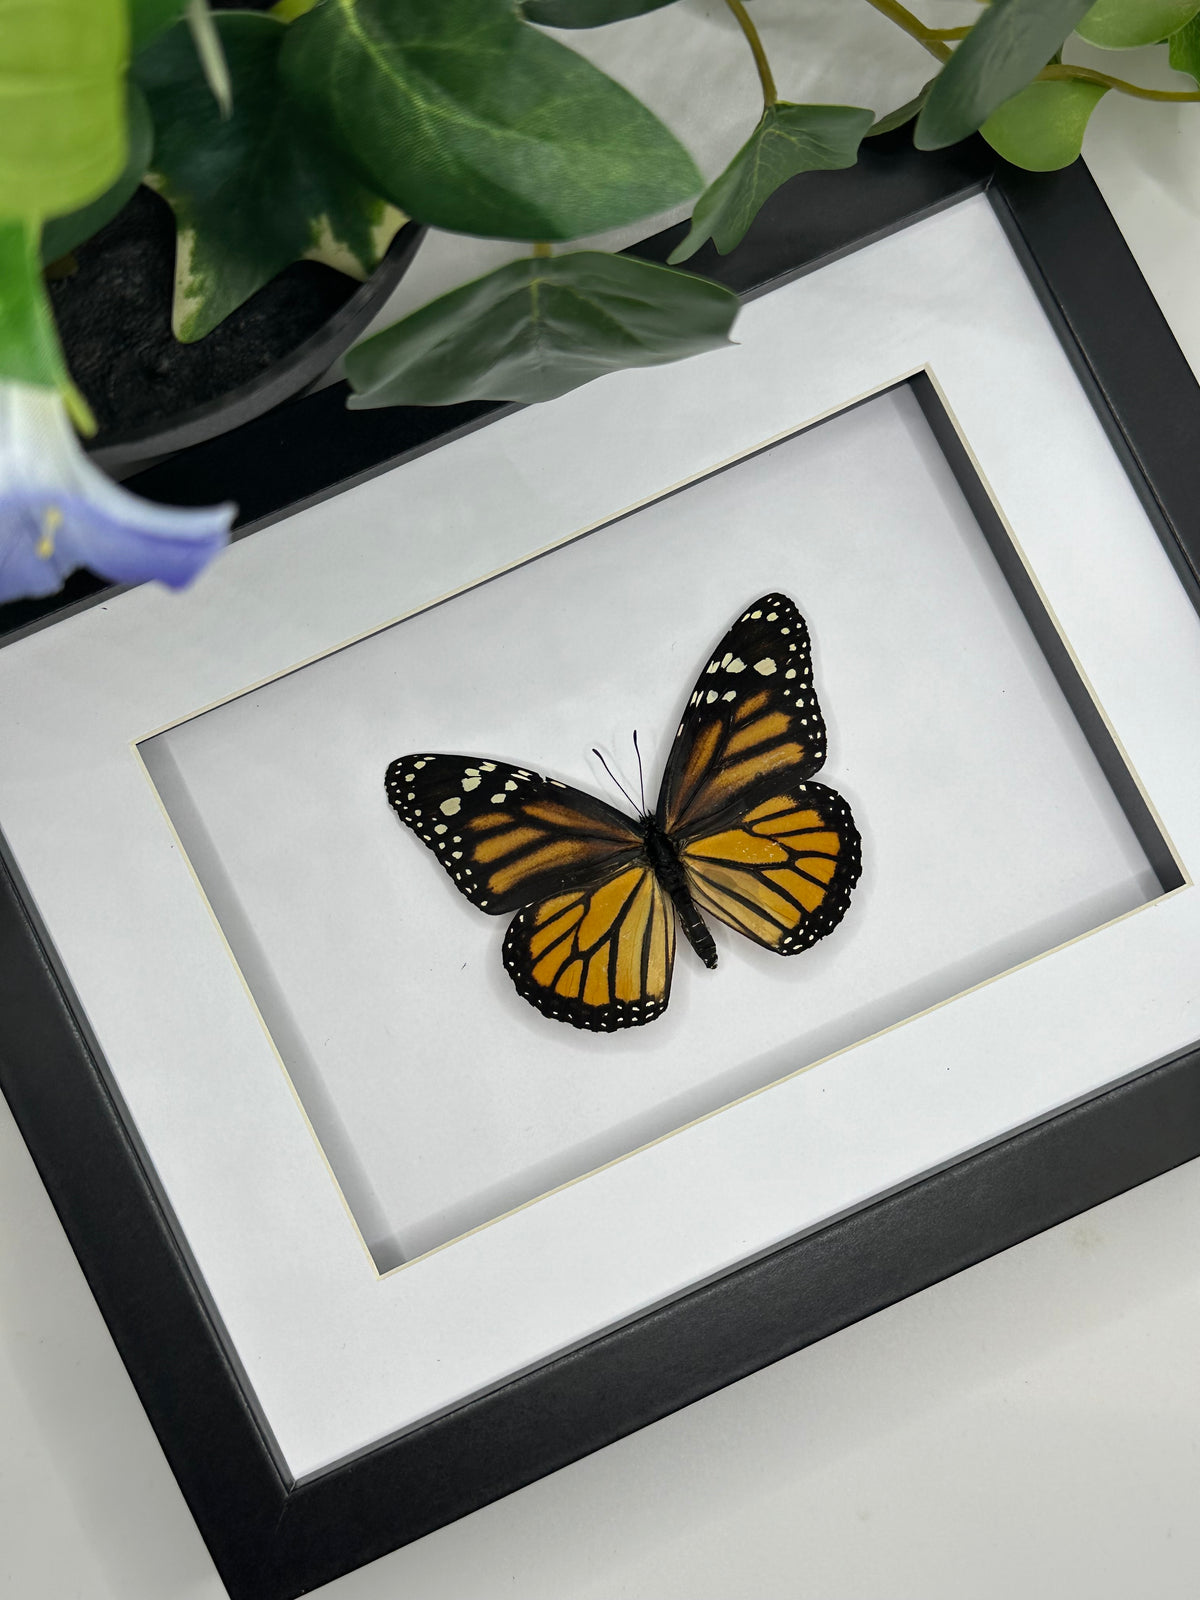 Monarch Butterfly / Danaus Plexippus in a frame